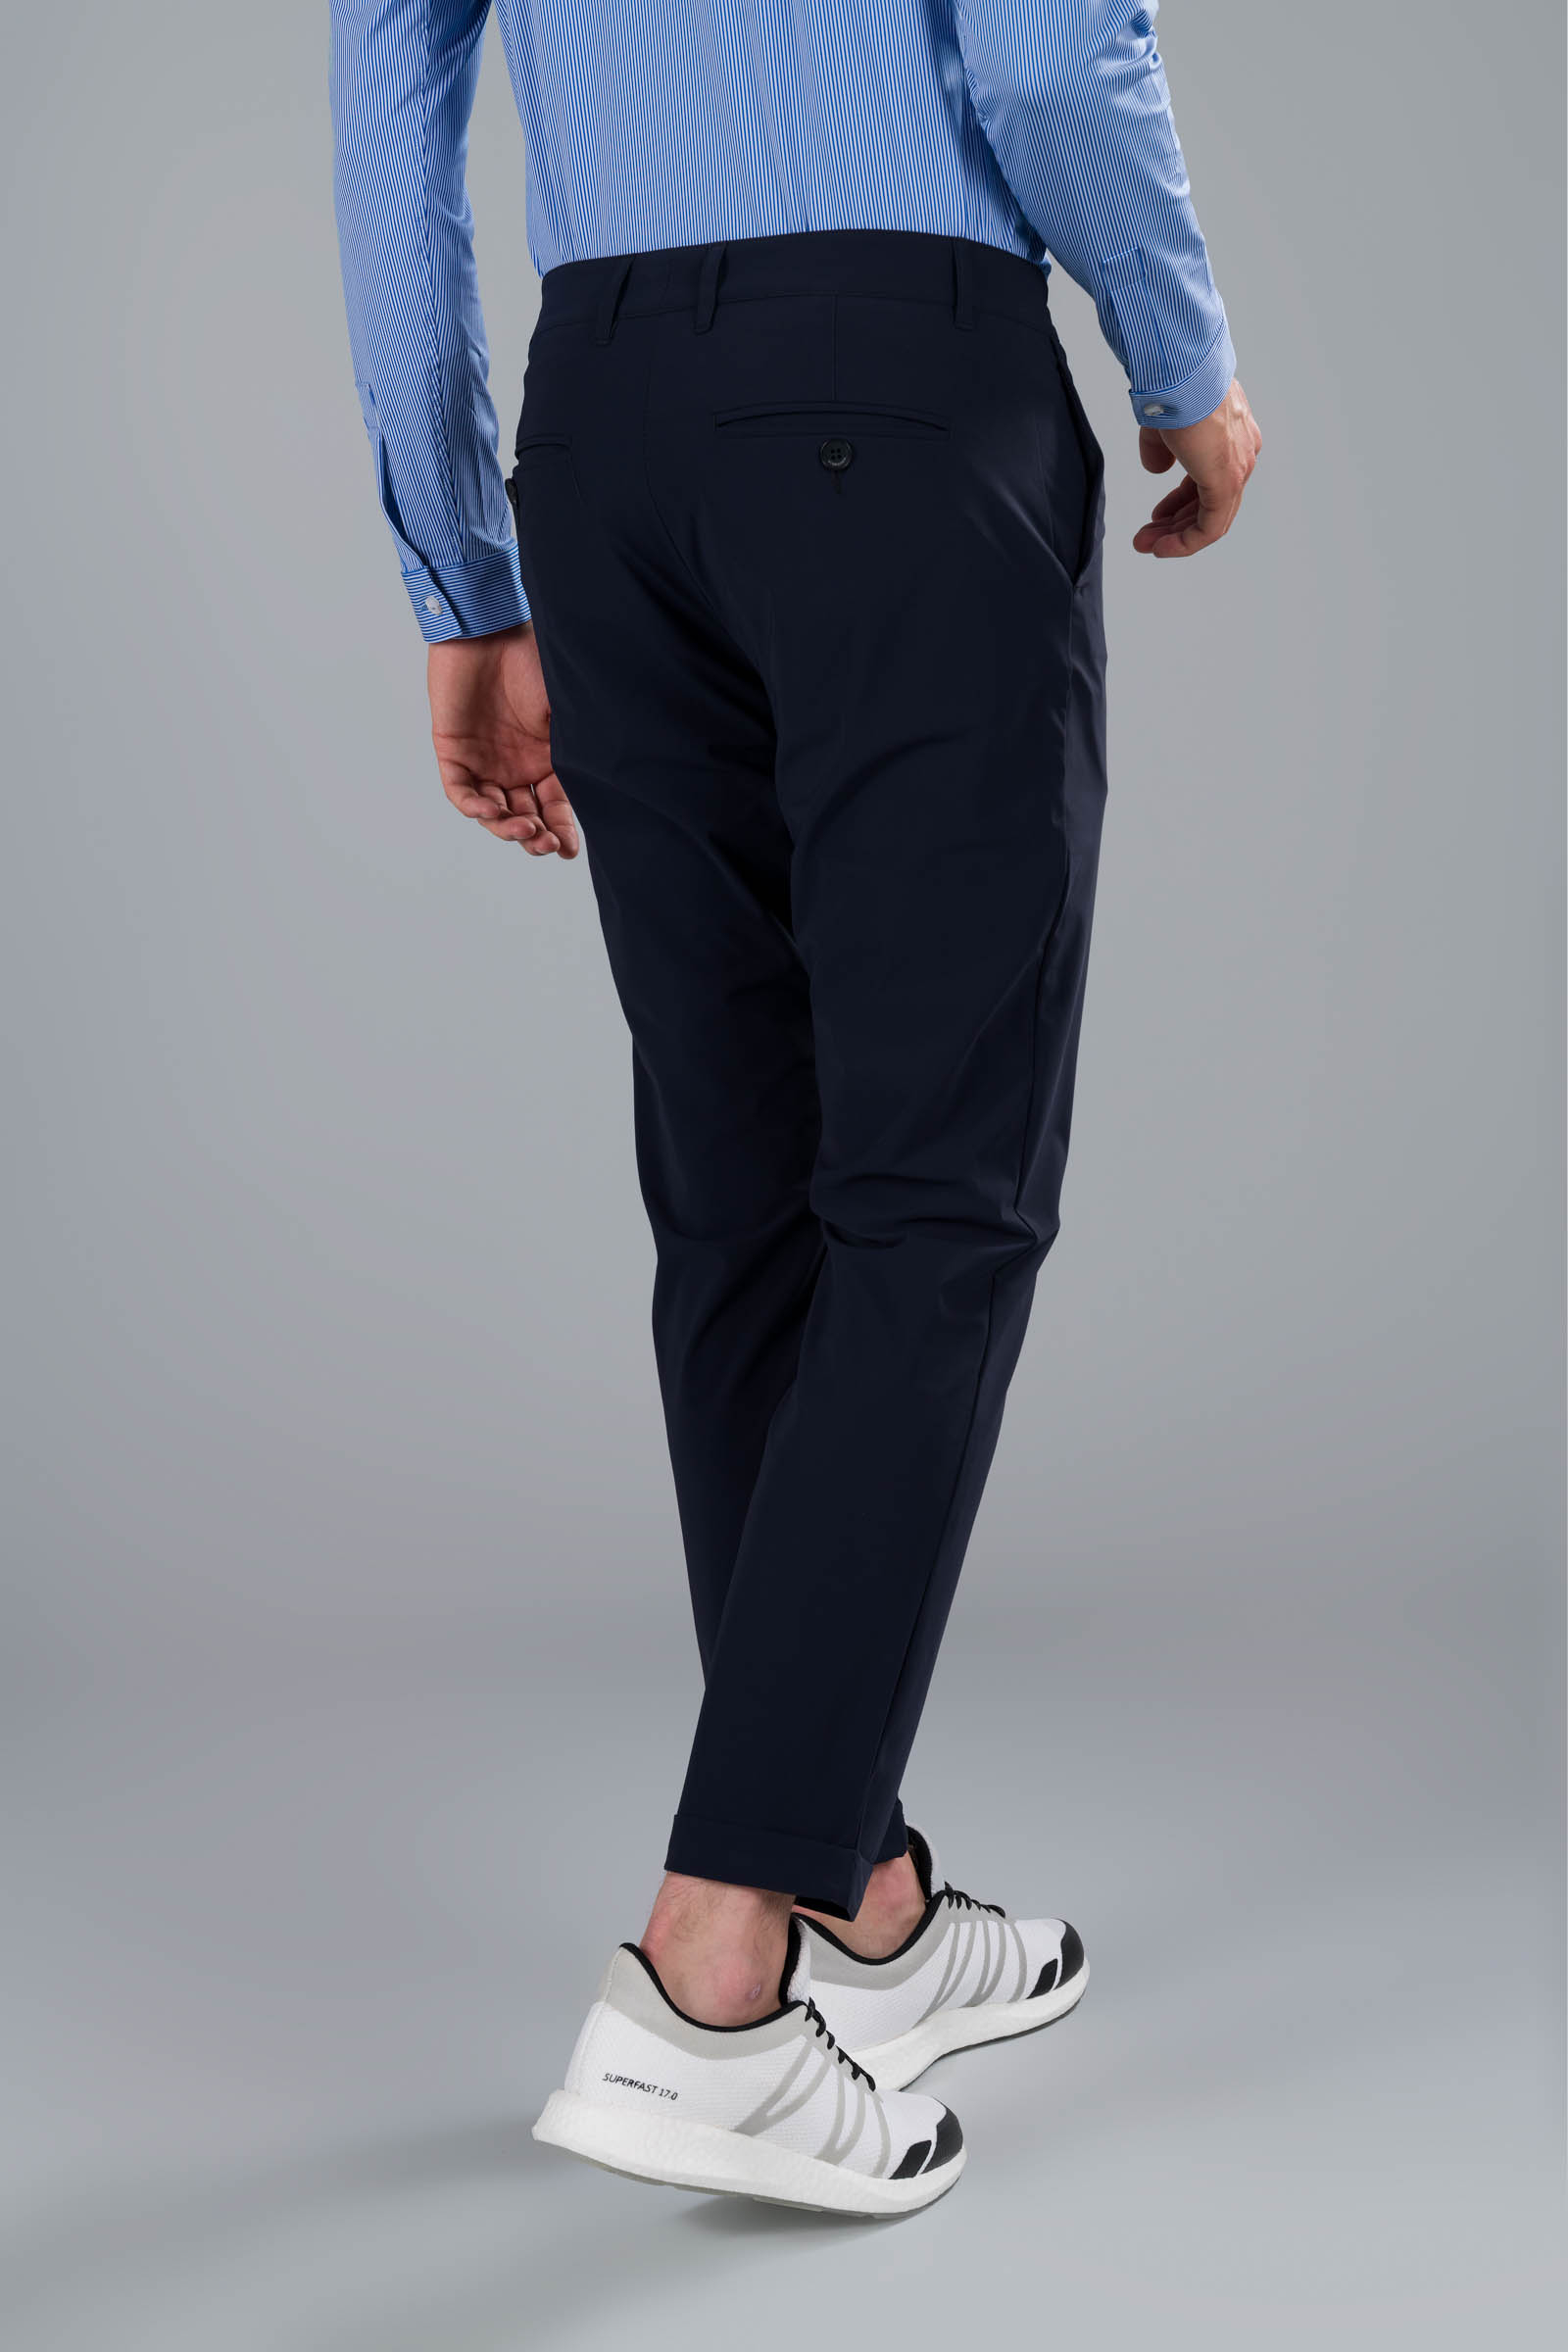 CLASSIC PANTS - BLUE NAVY - Abbigliamento sportivo | Hydrogen